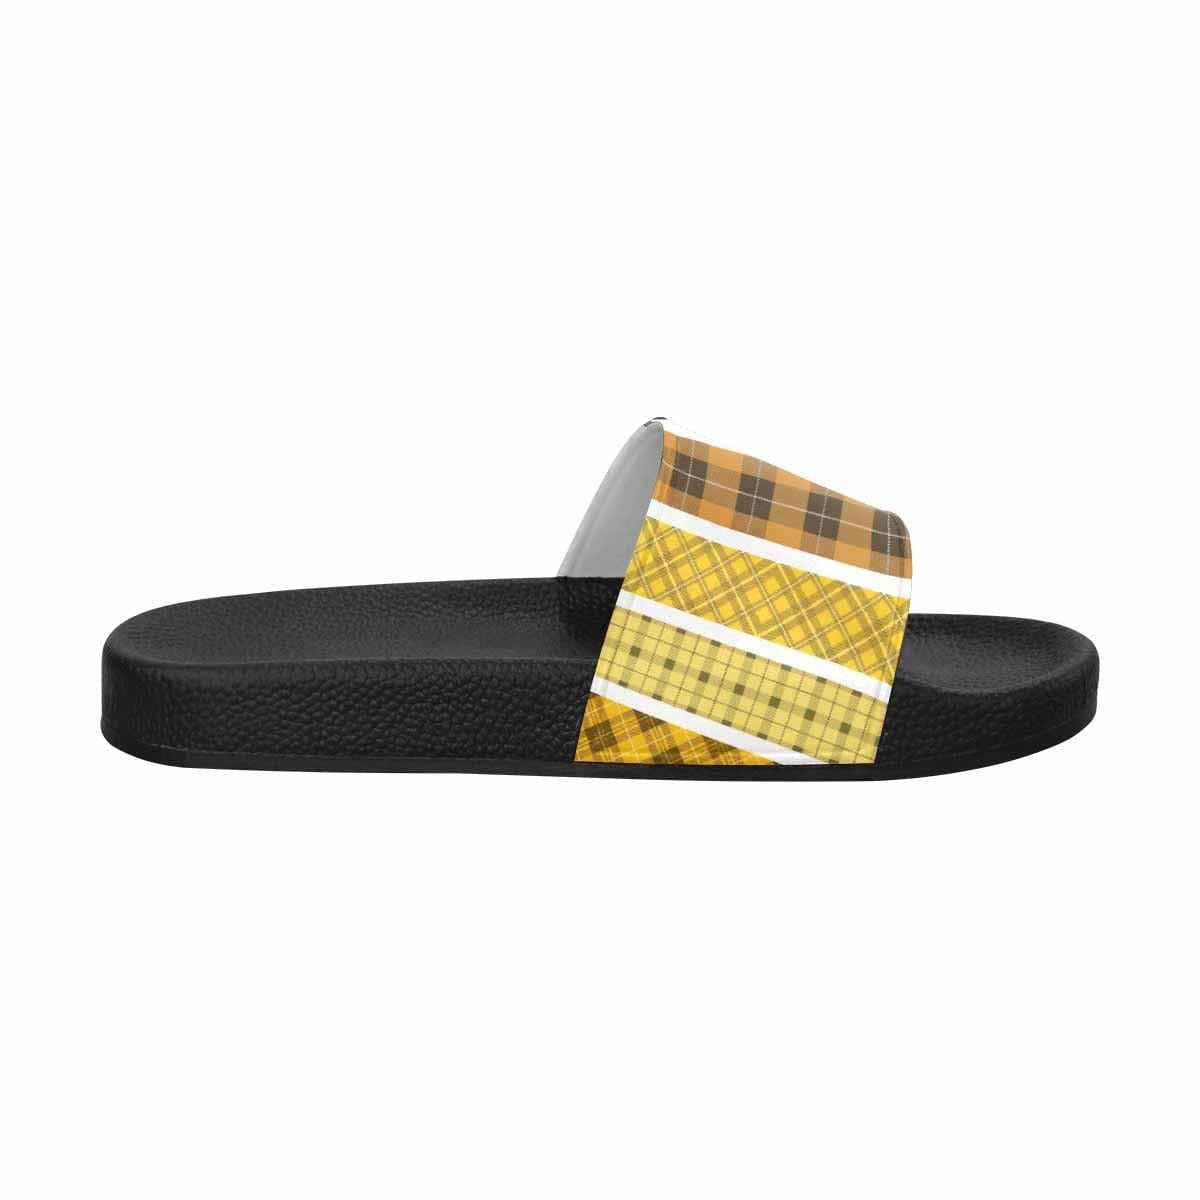 Mens Flip Flop Slide Sandals - Yellow/black Tartan Style - Dg995038